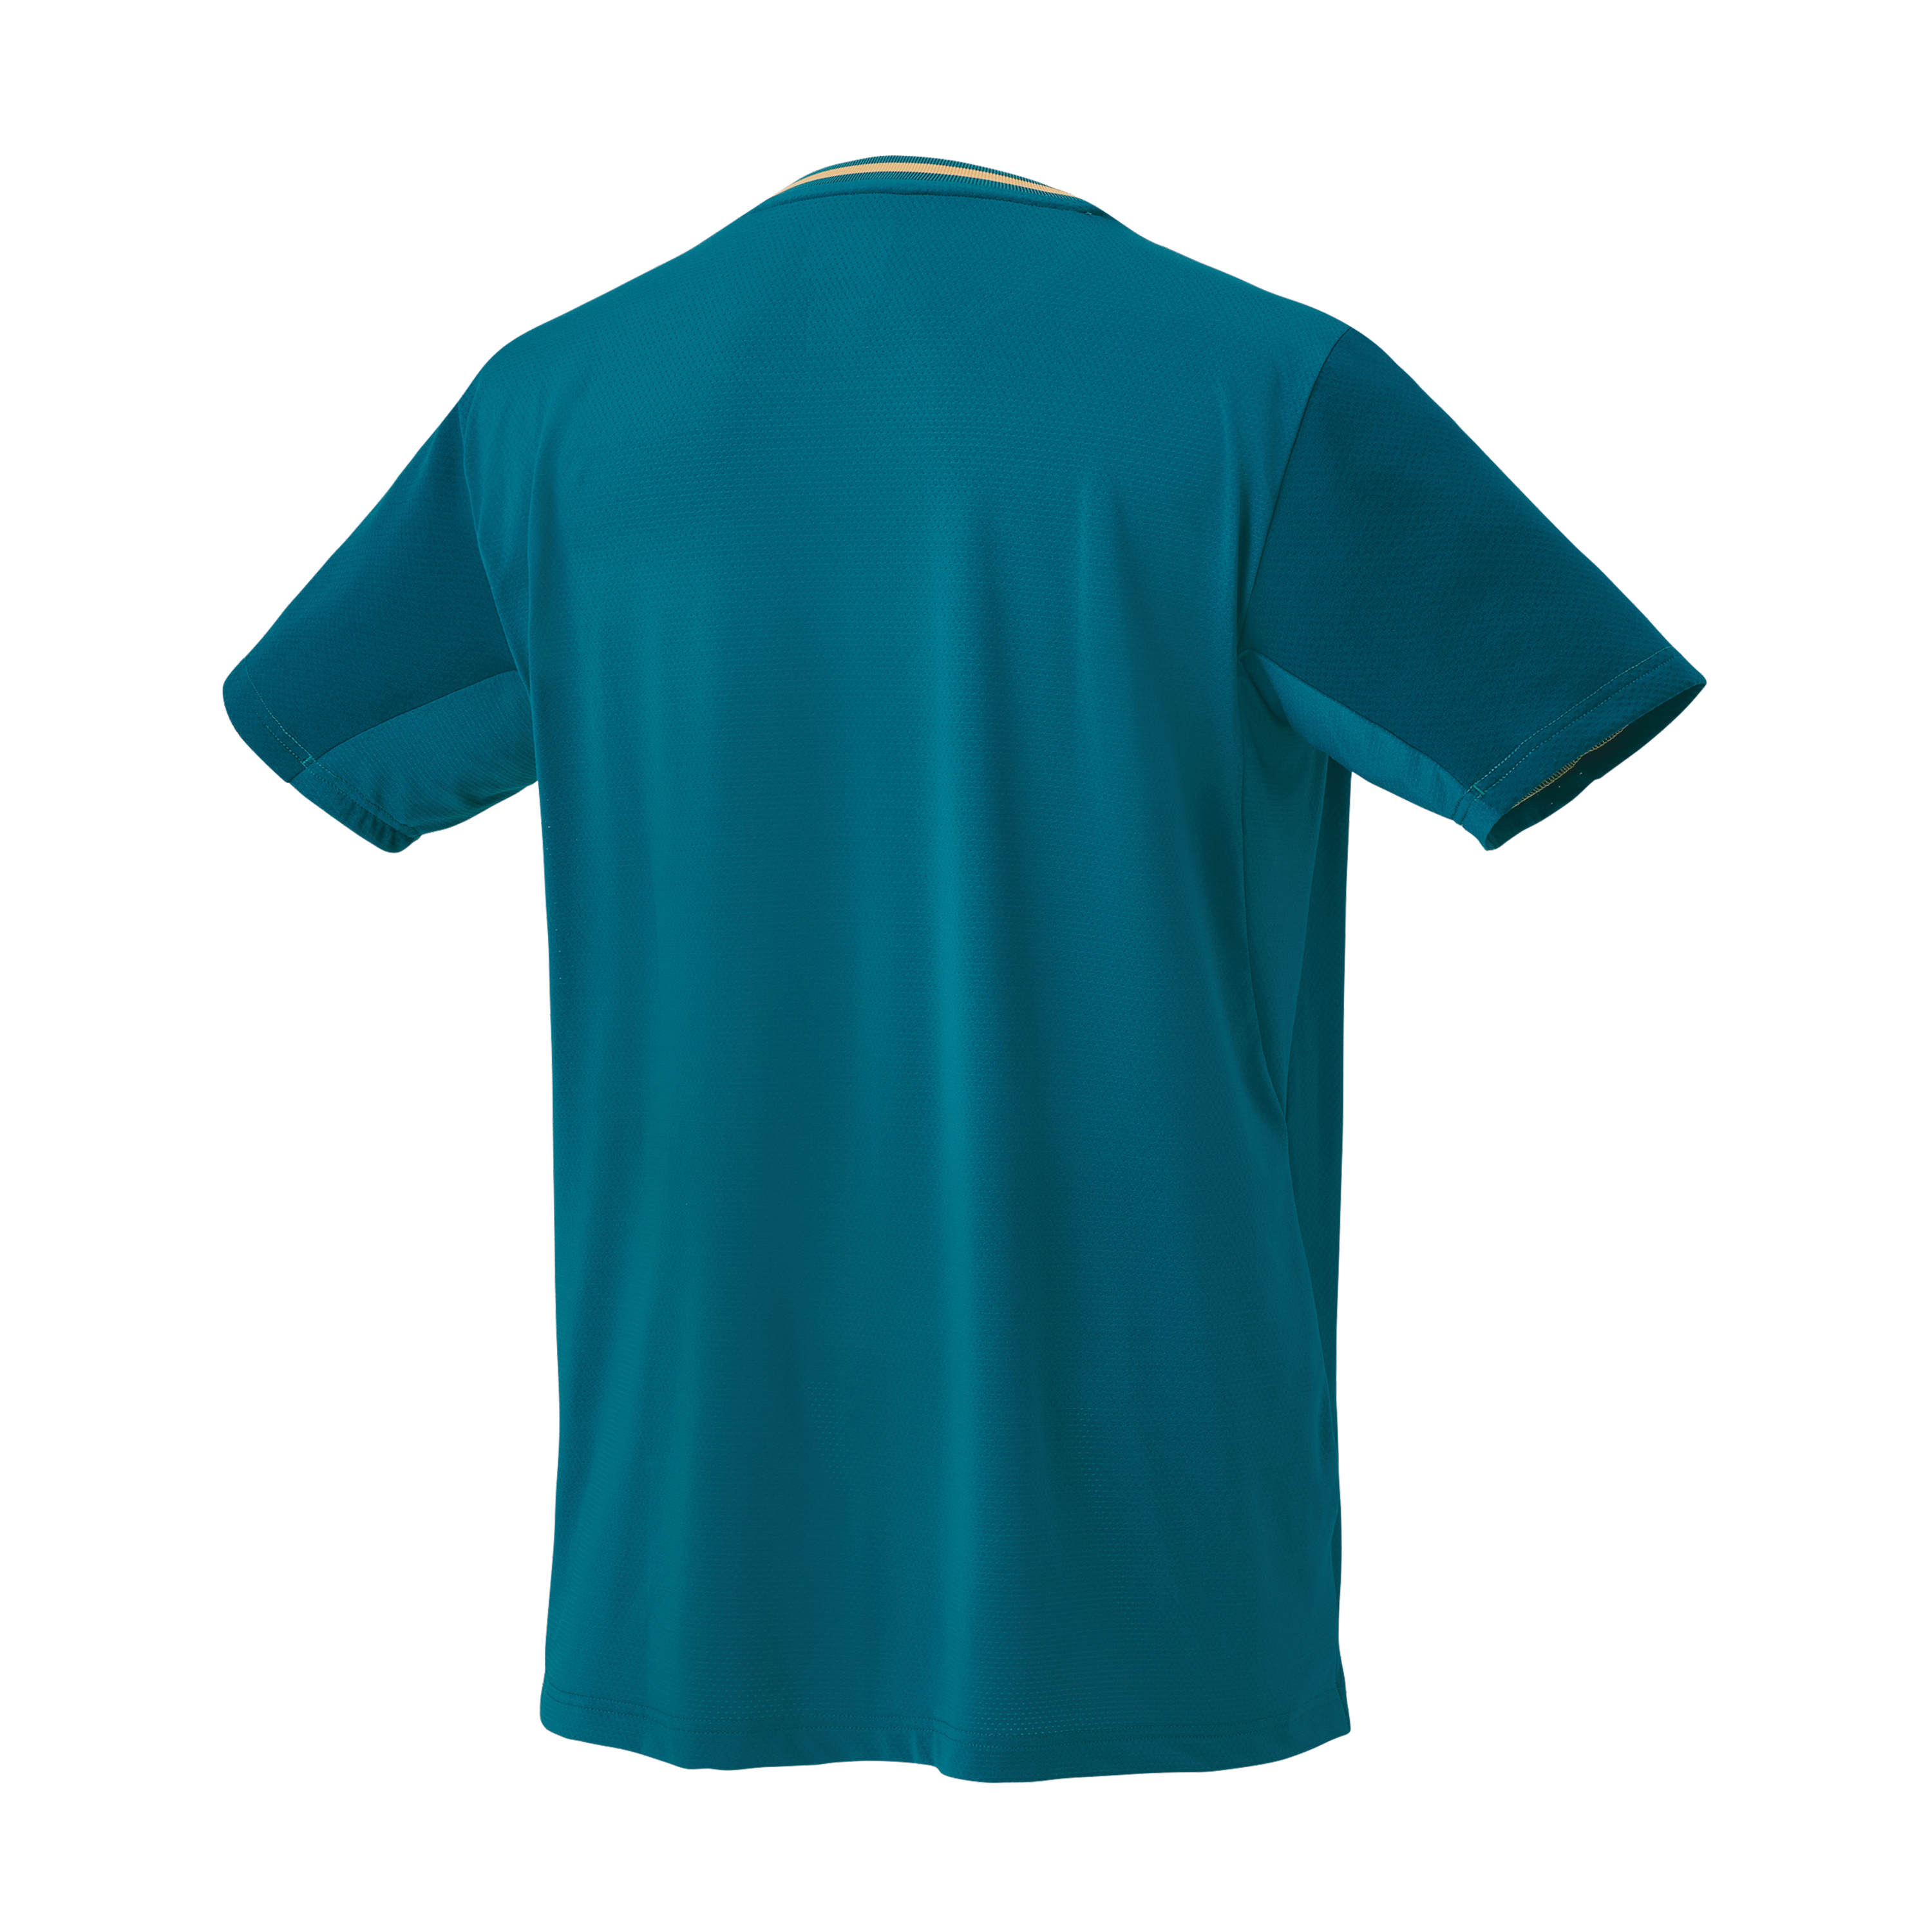 Yonex Premium Badminton/ Tennis Shirt 10559 Blue/ Green MEN'S